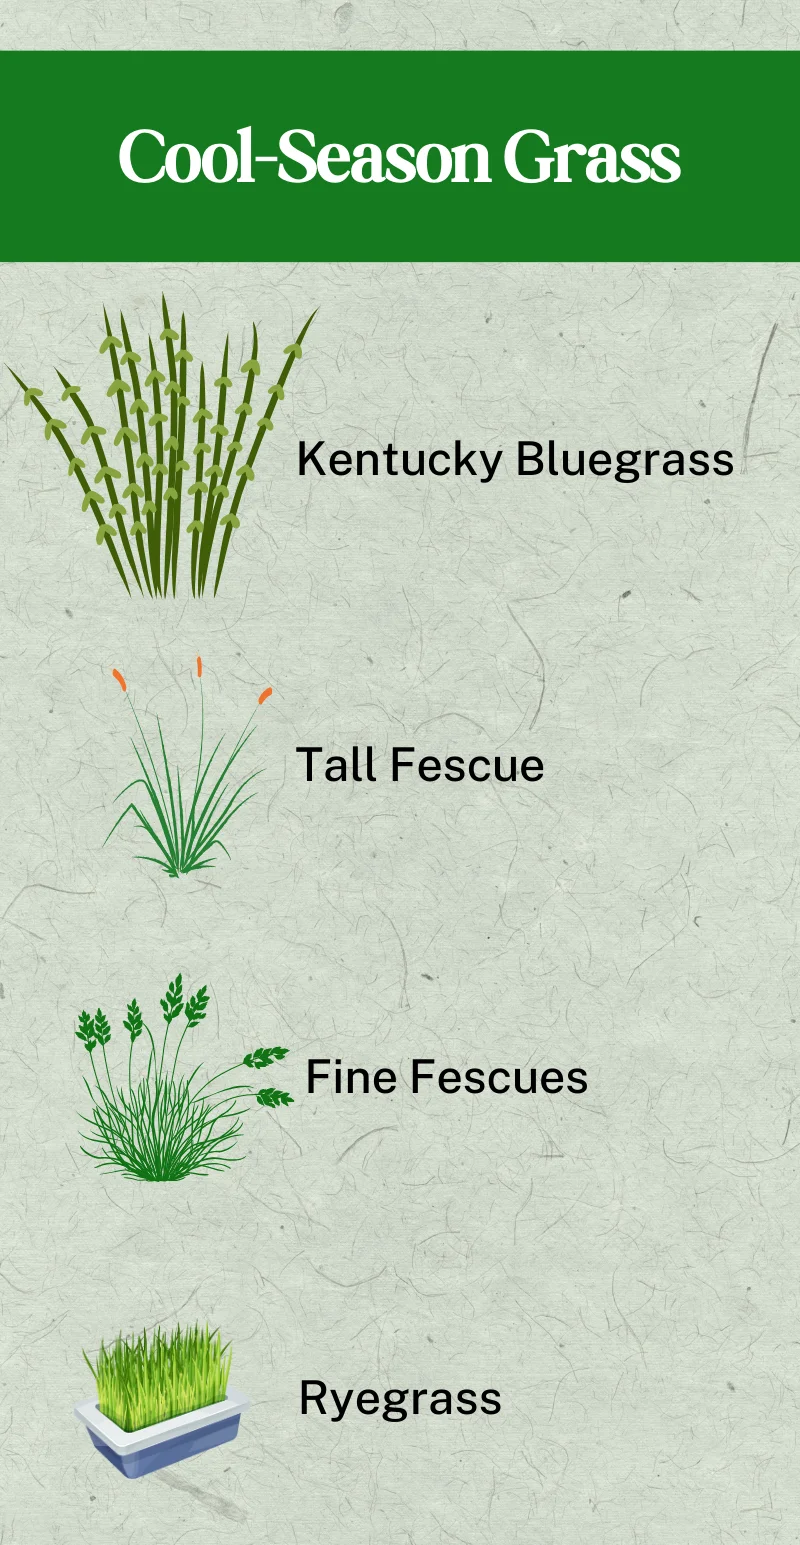 A list infographic of cool season grass